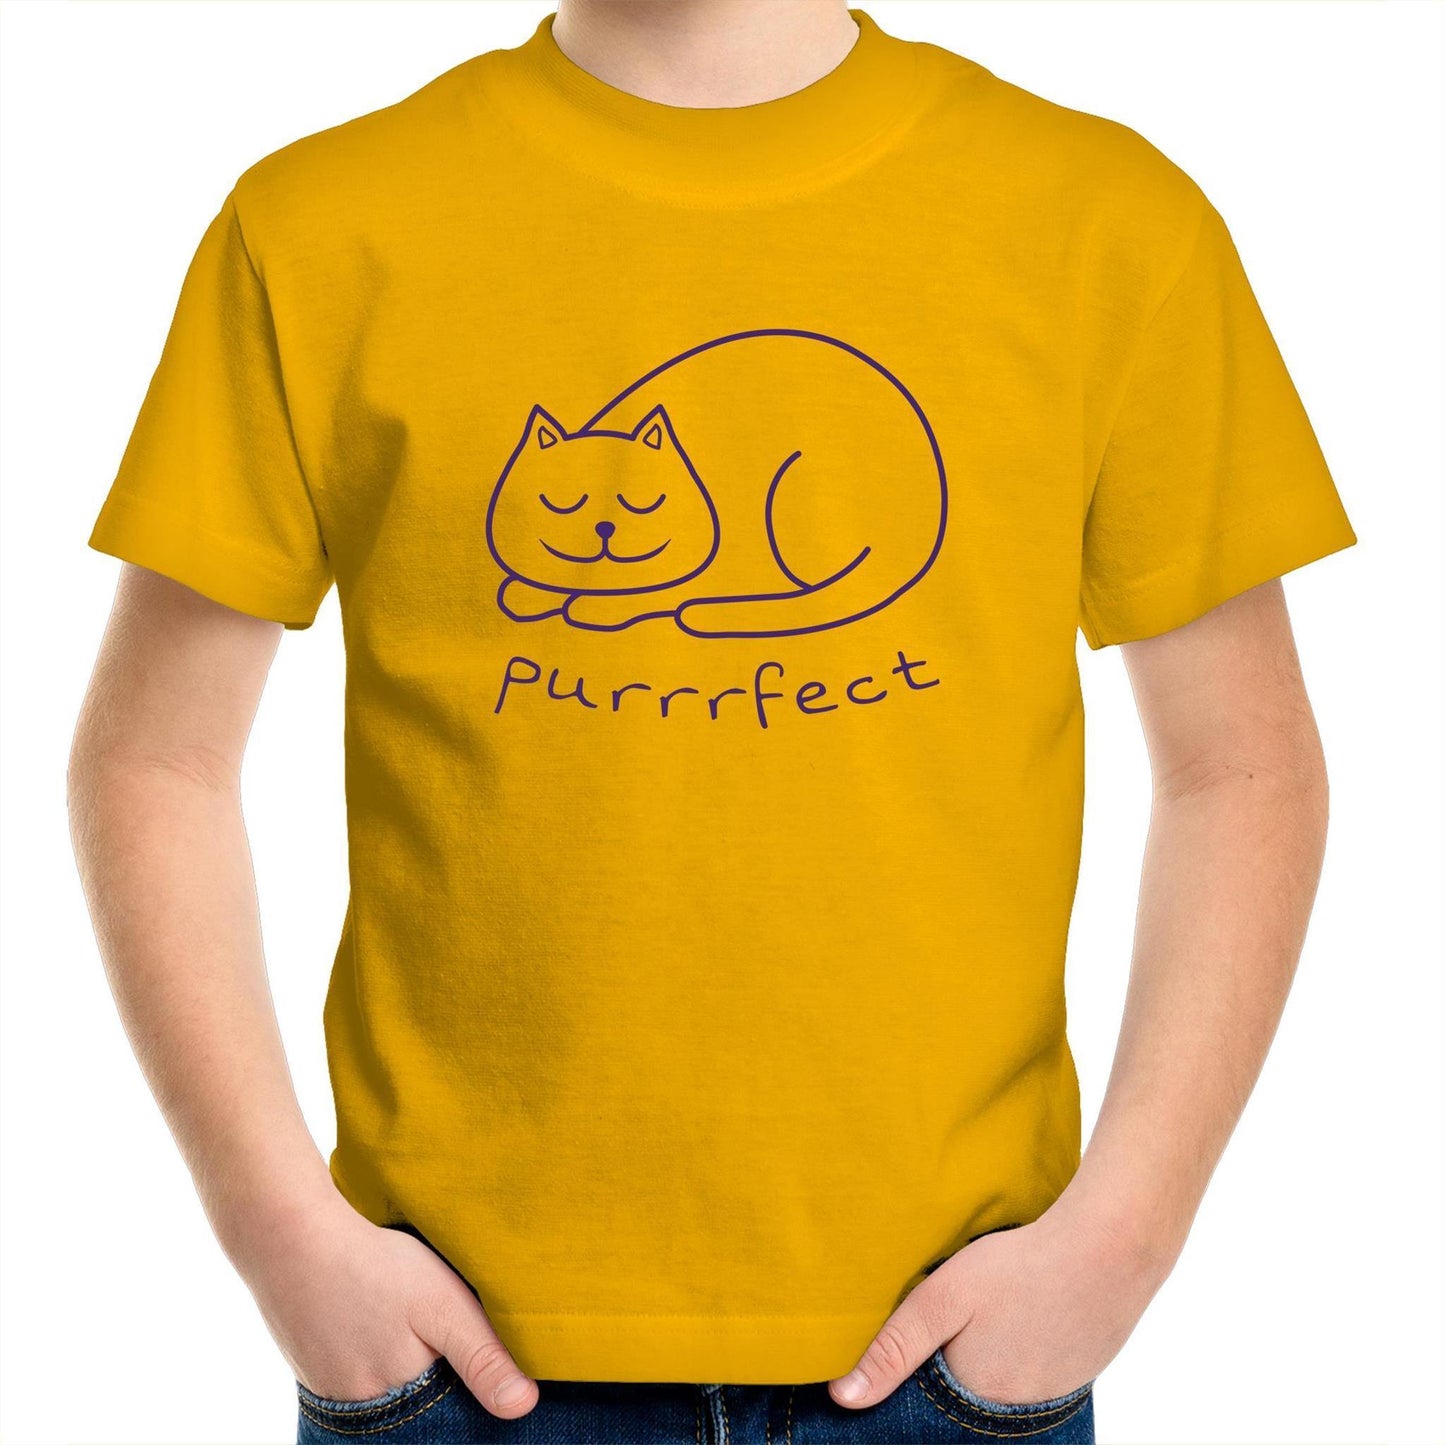 Purrrfect - Kids Youth Crew T-Shirt Gold Kids Youth T-shirt animal